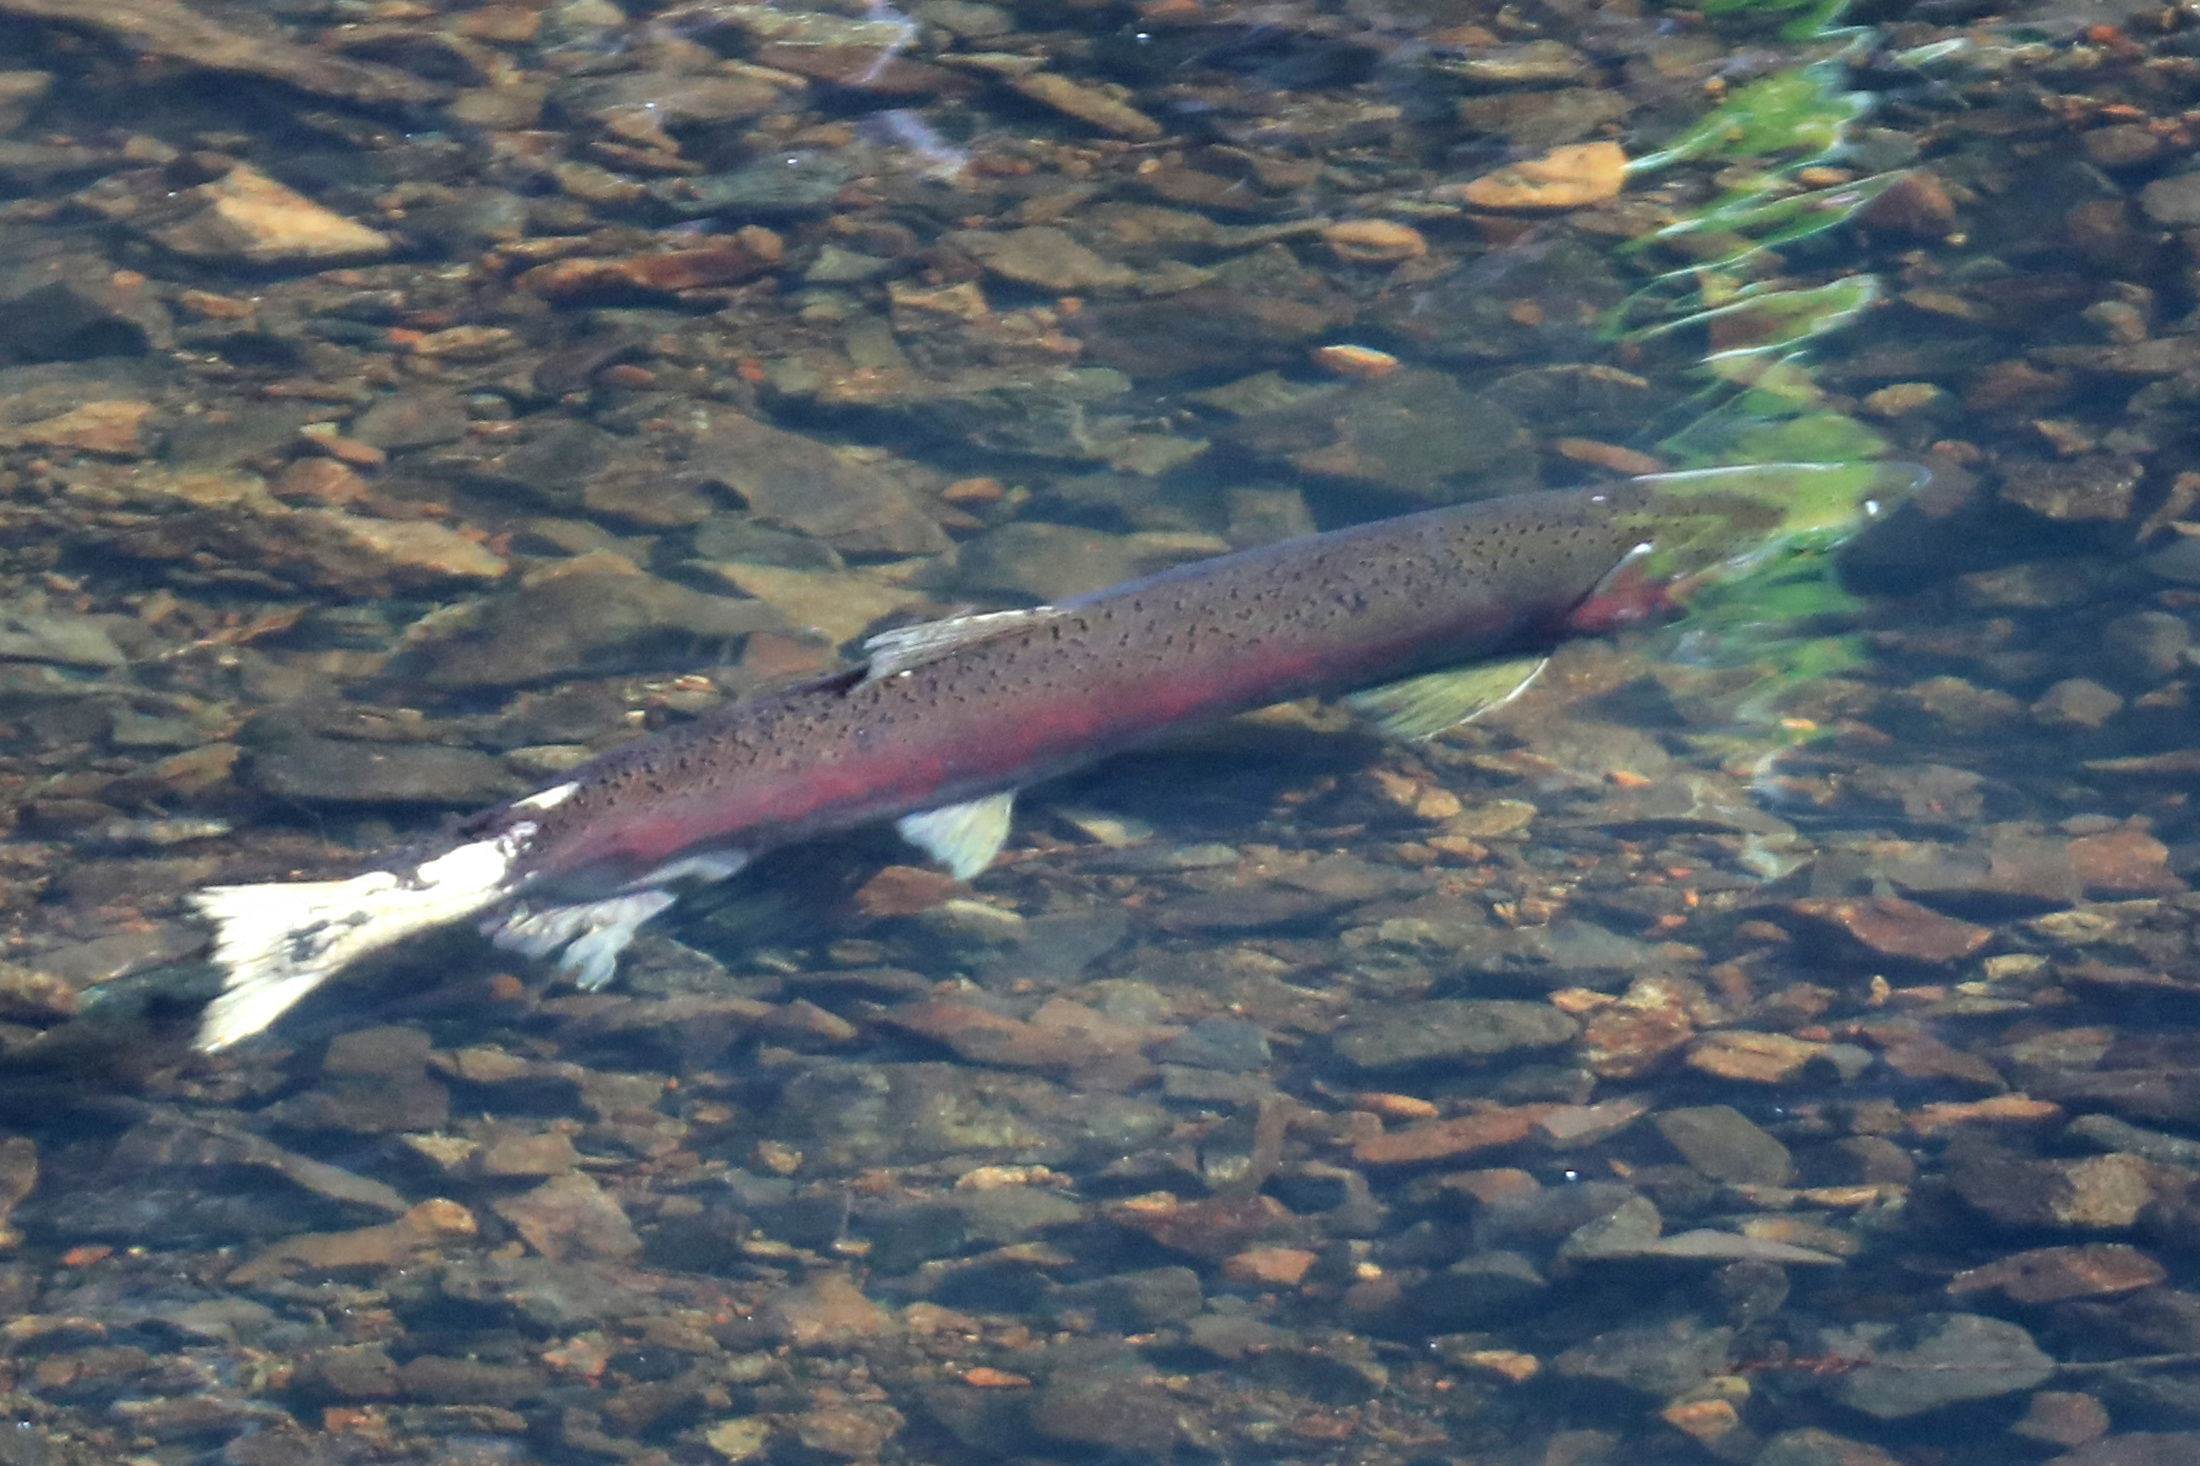 An endangered coho salmon swims during spawning season in Lagunitas Creek in Marin County